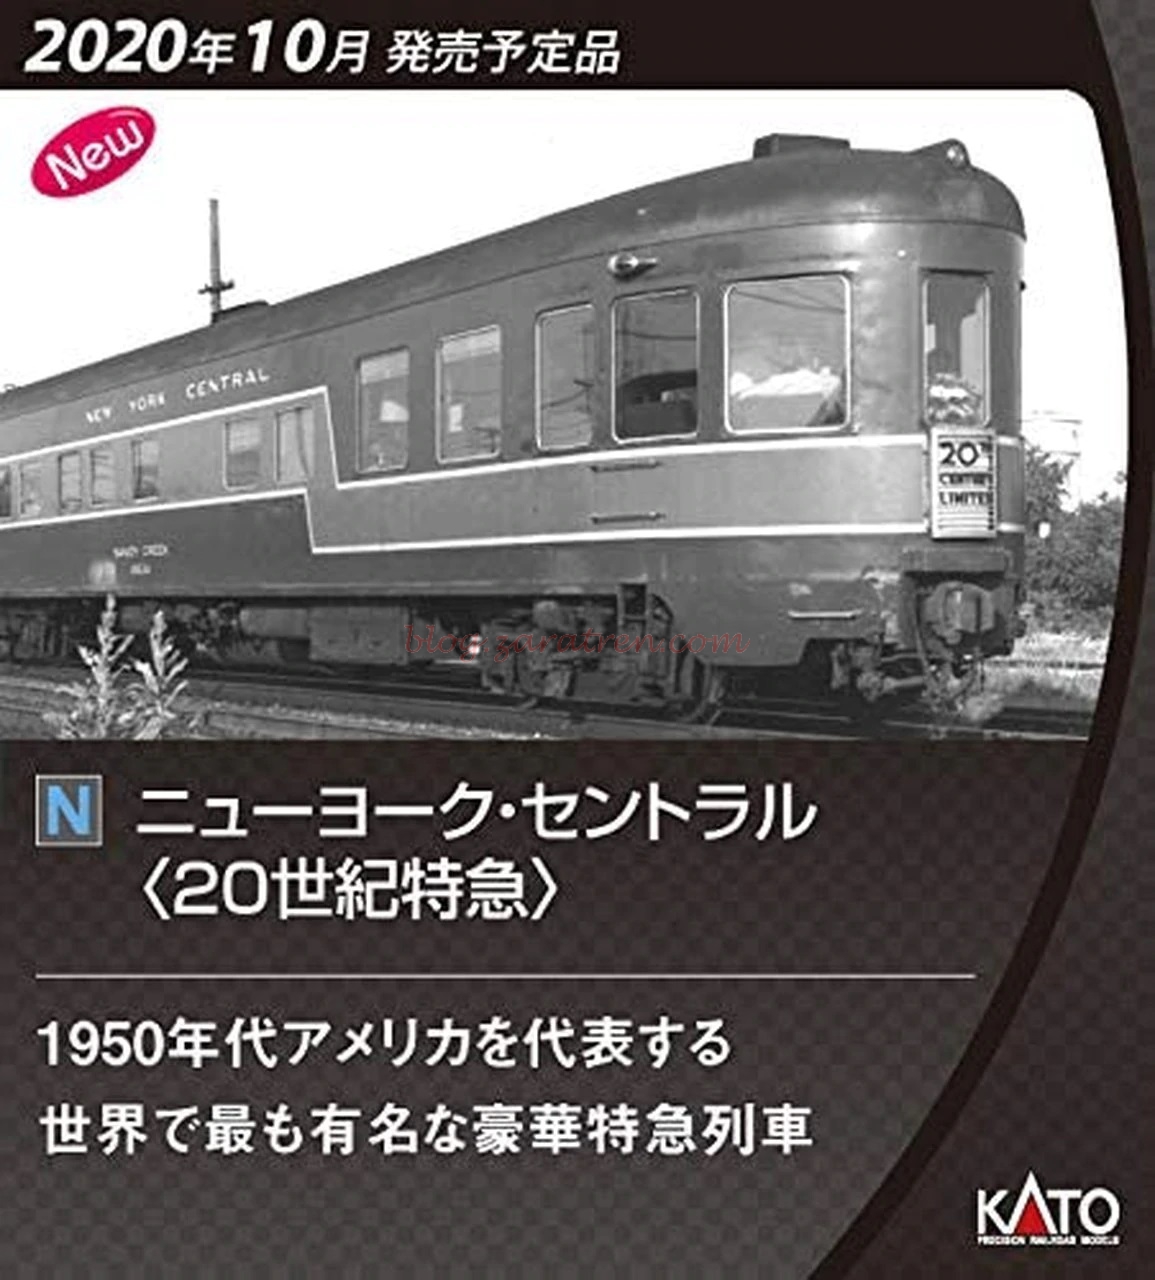 Kato – Set basico de 9 coches » 20th Century Limited «, Epoca II-IV, Escala N, Ref: 10-763-2.